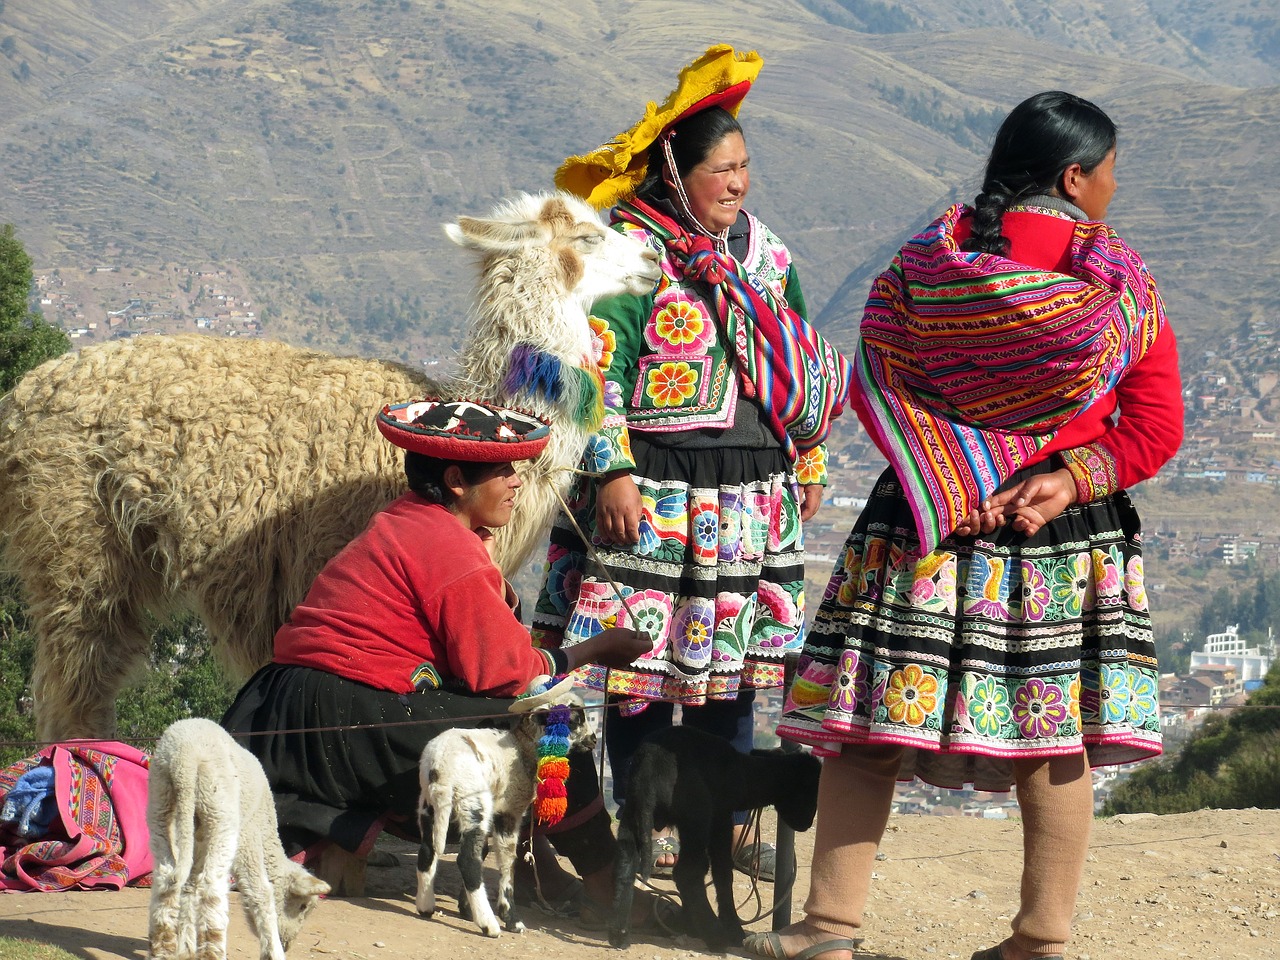 Peru, Peru, Kostiumas, Tradicinis, Cuzco, Andes, Cordillera, Lama, Alpaka, Etninis